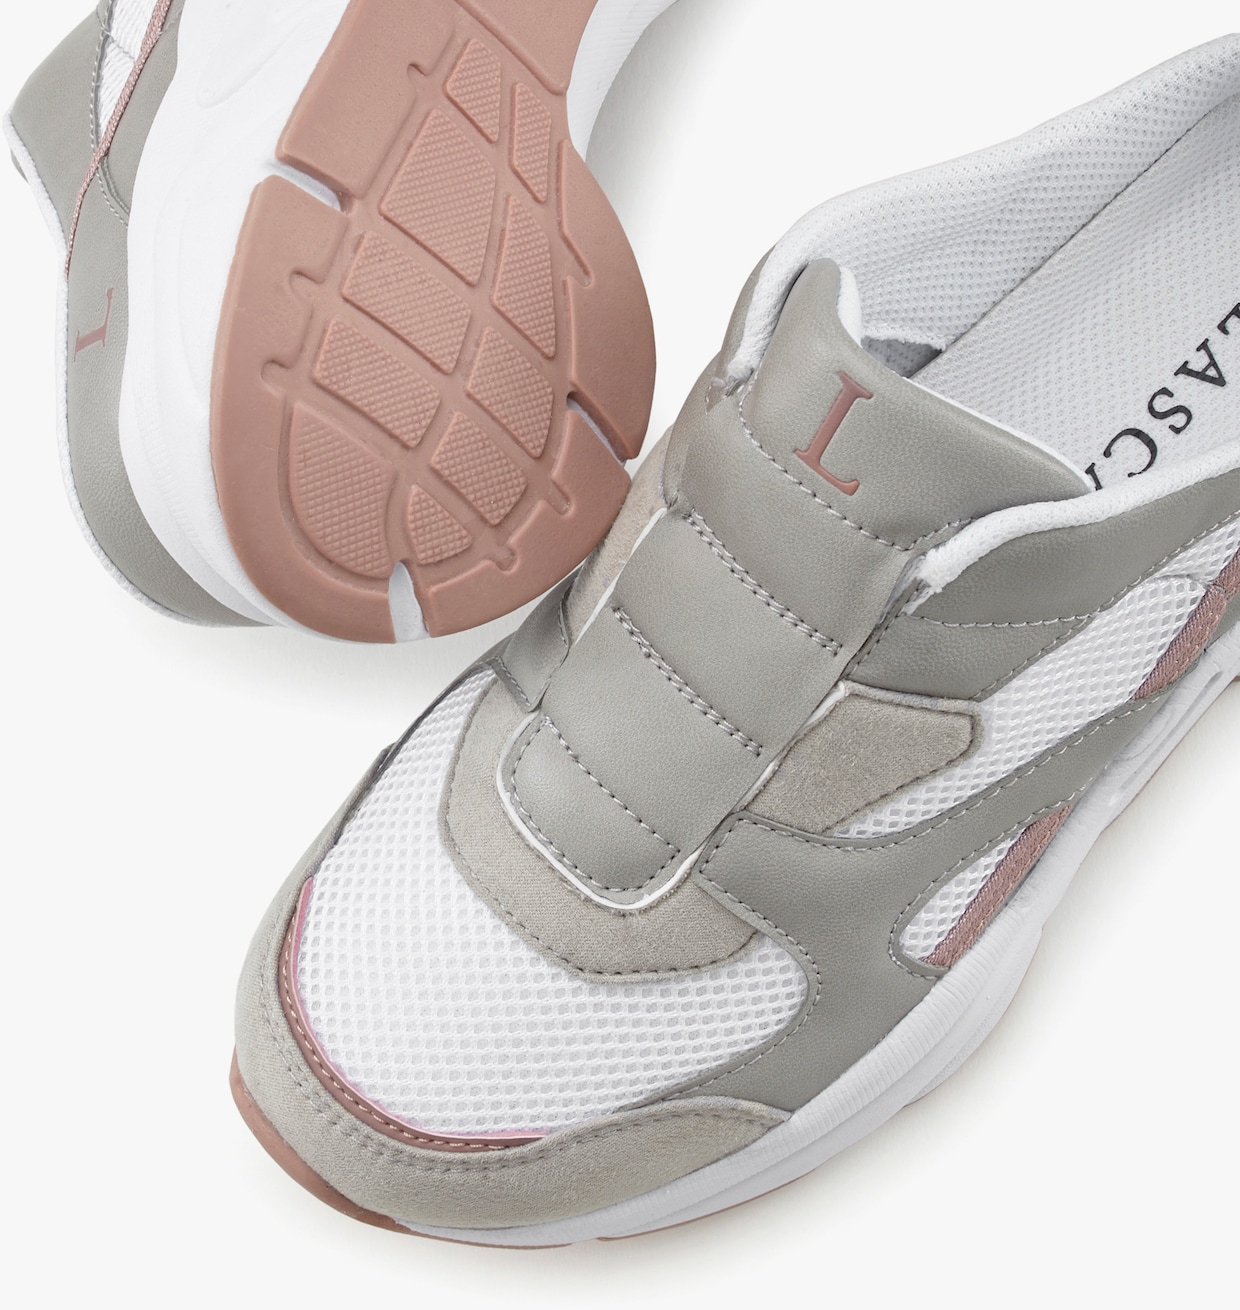 LASCANA Sneakers slip on - blanc-gris-rose